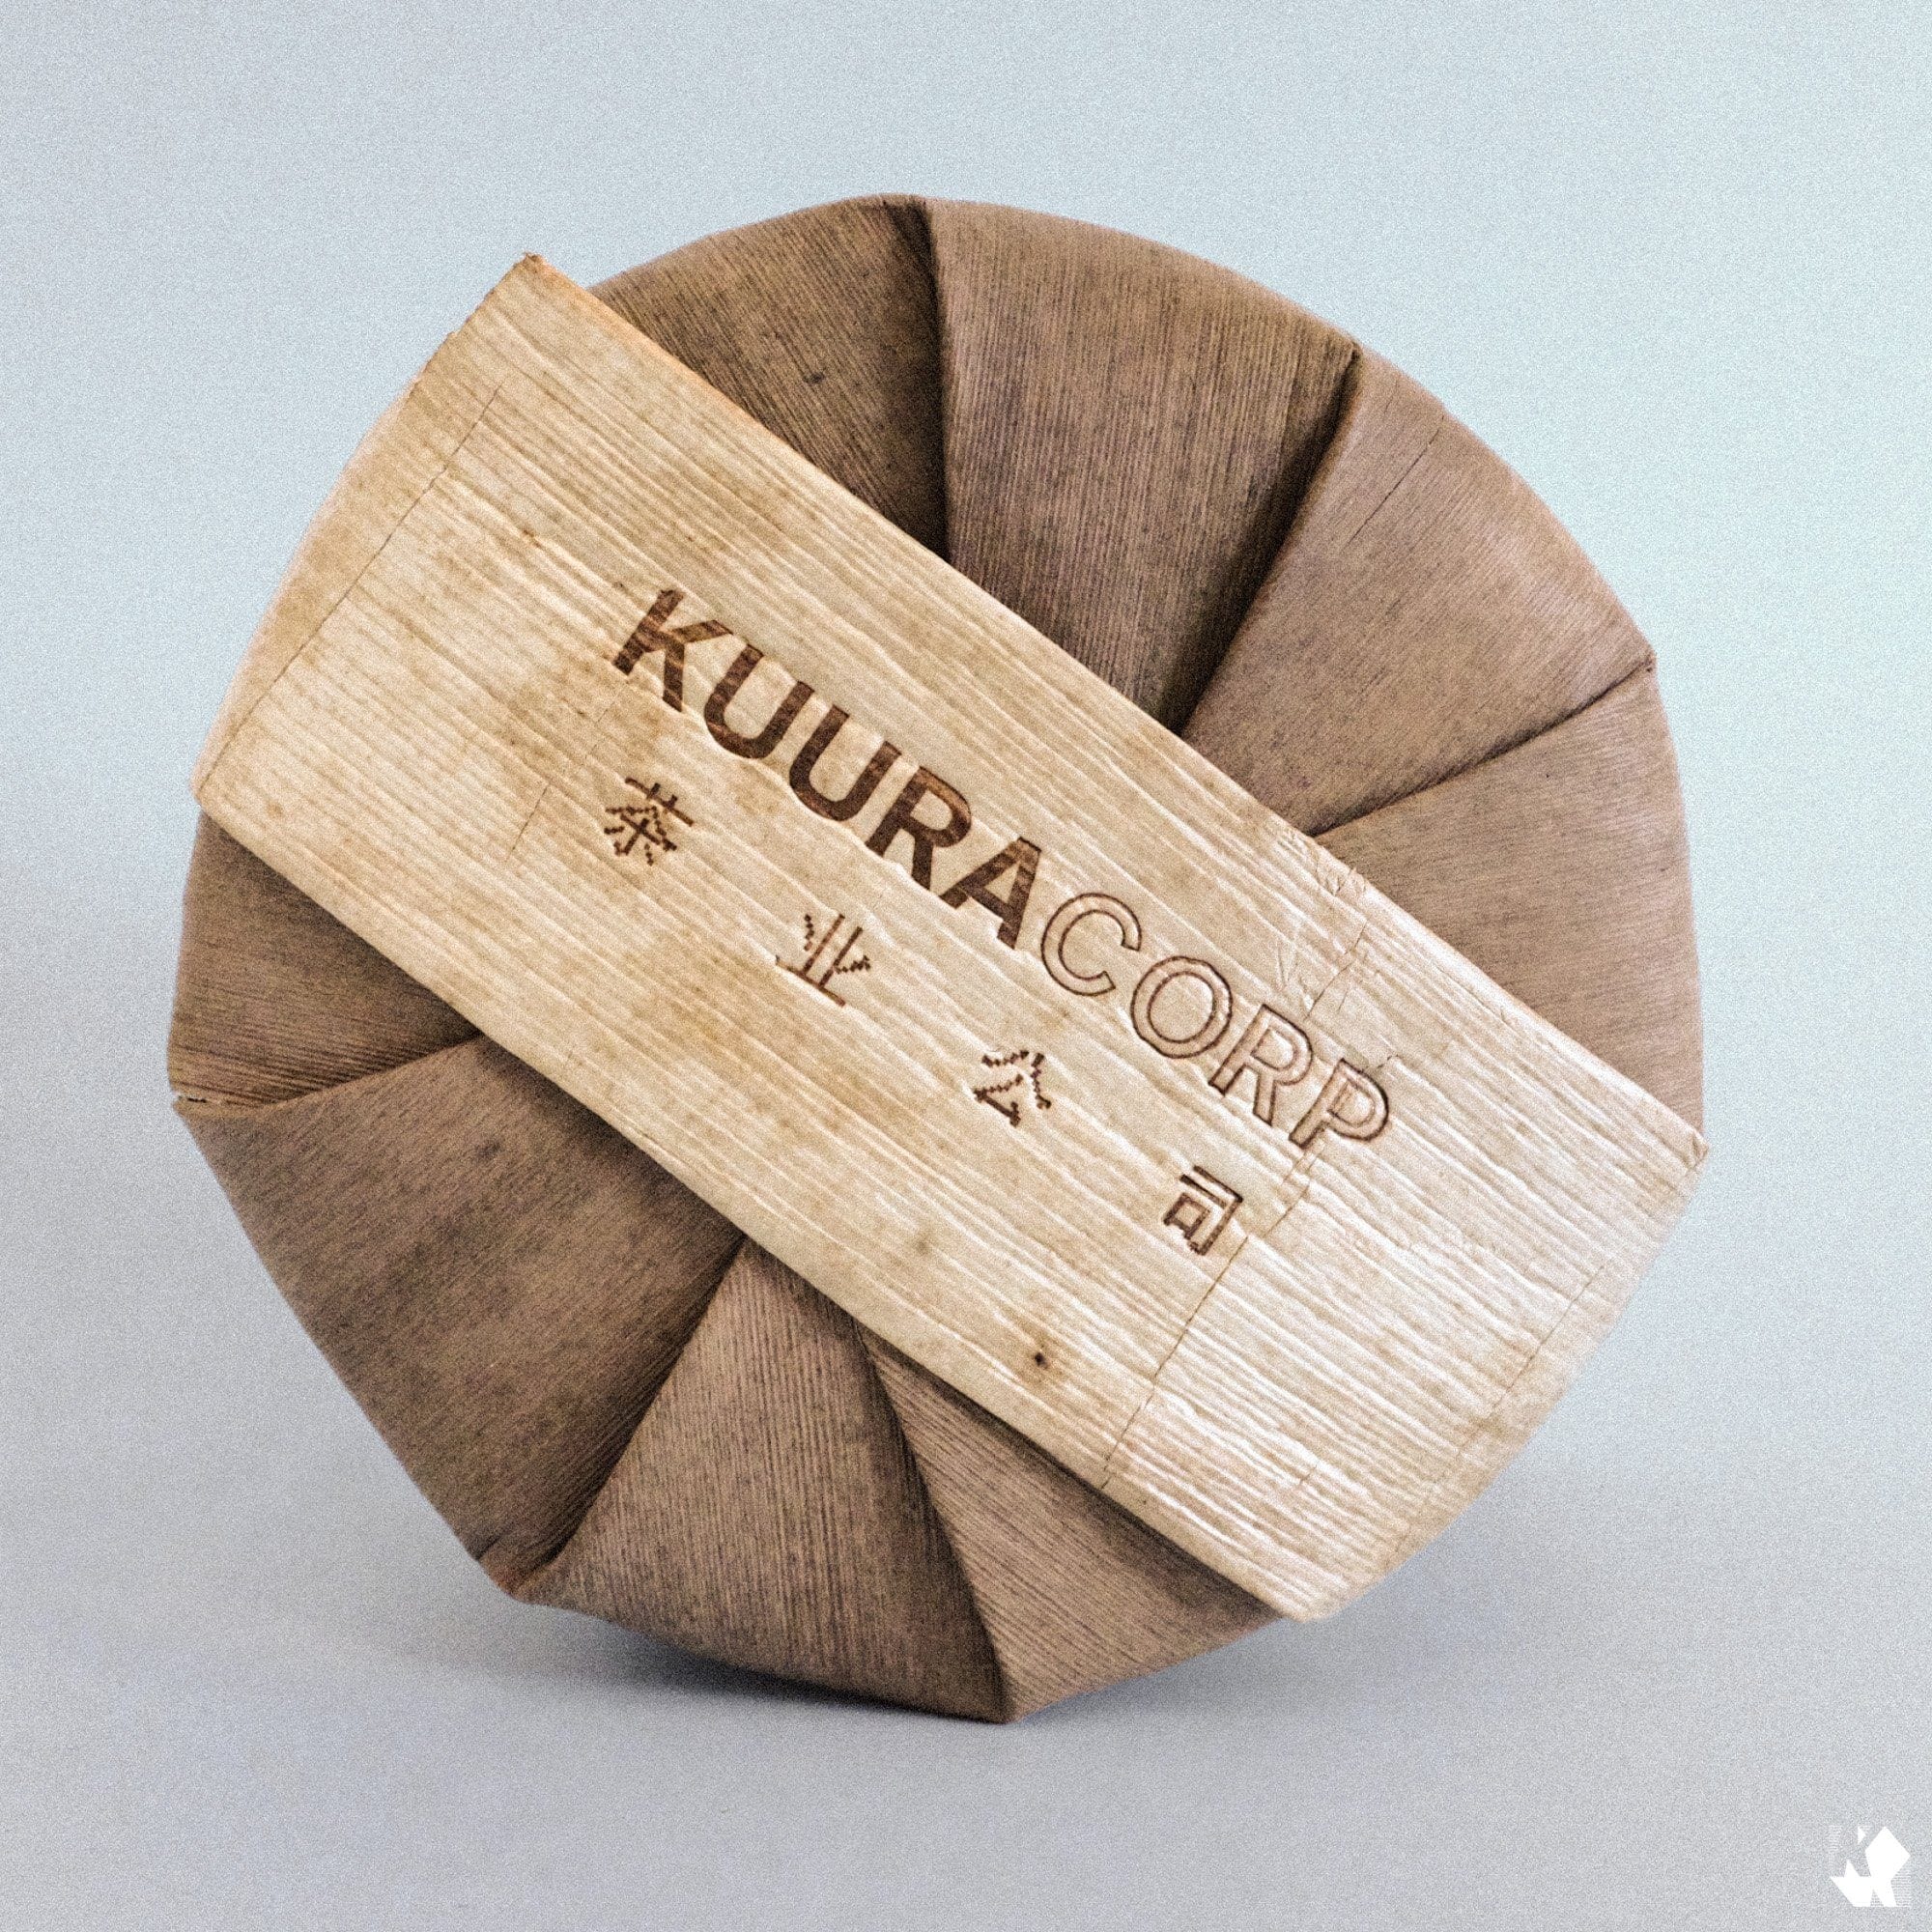 2020 'KUURA-COLA' Ripe Puer Tea KUURA Tong (5 x 200g cakes) 